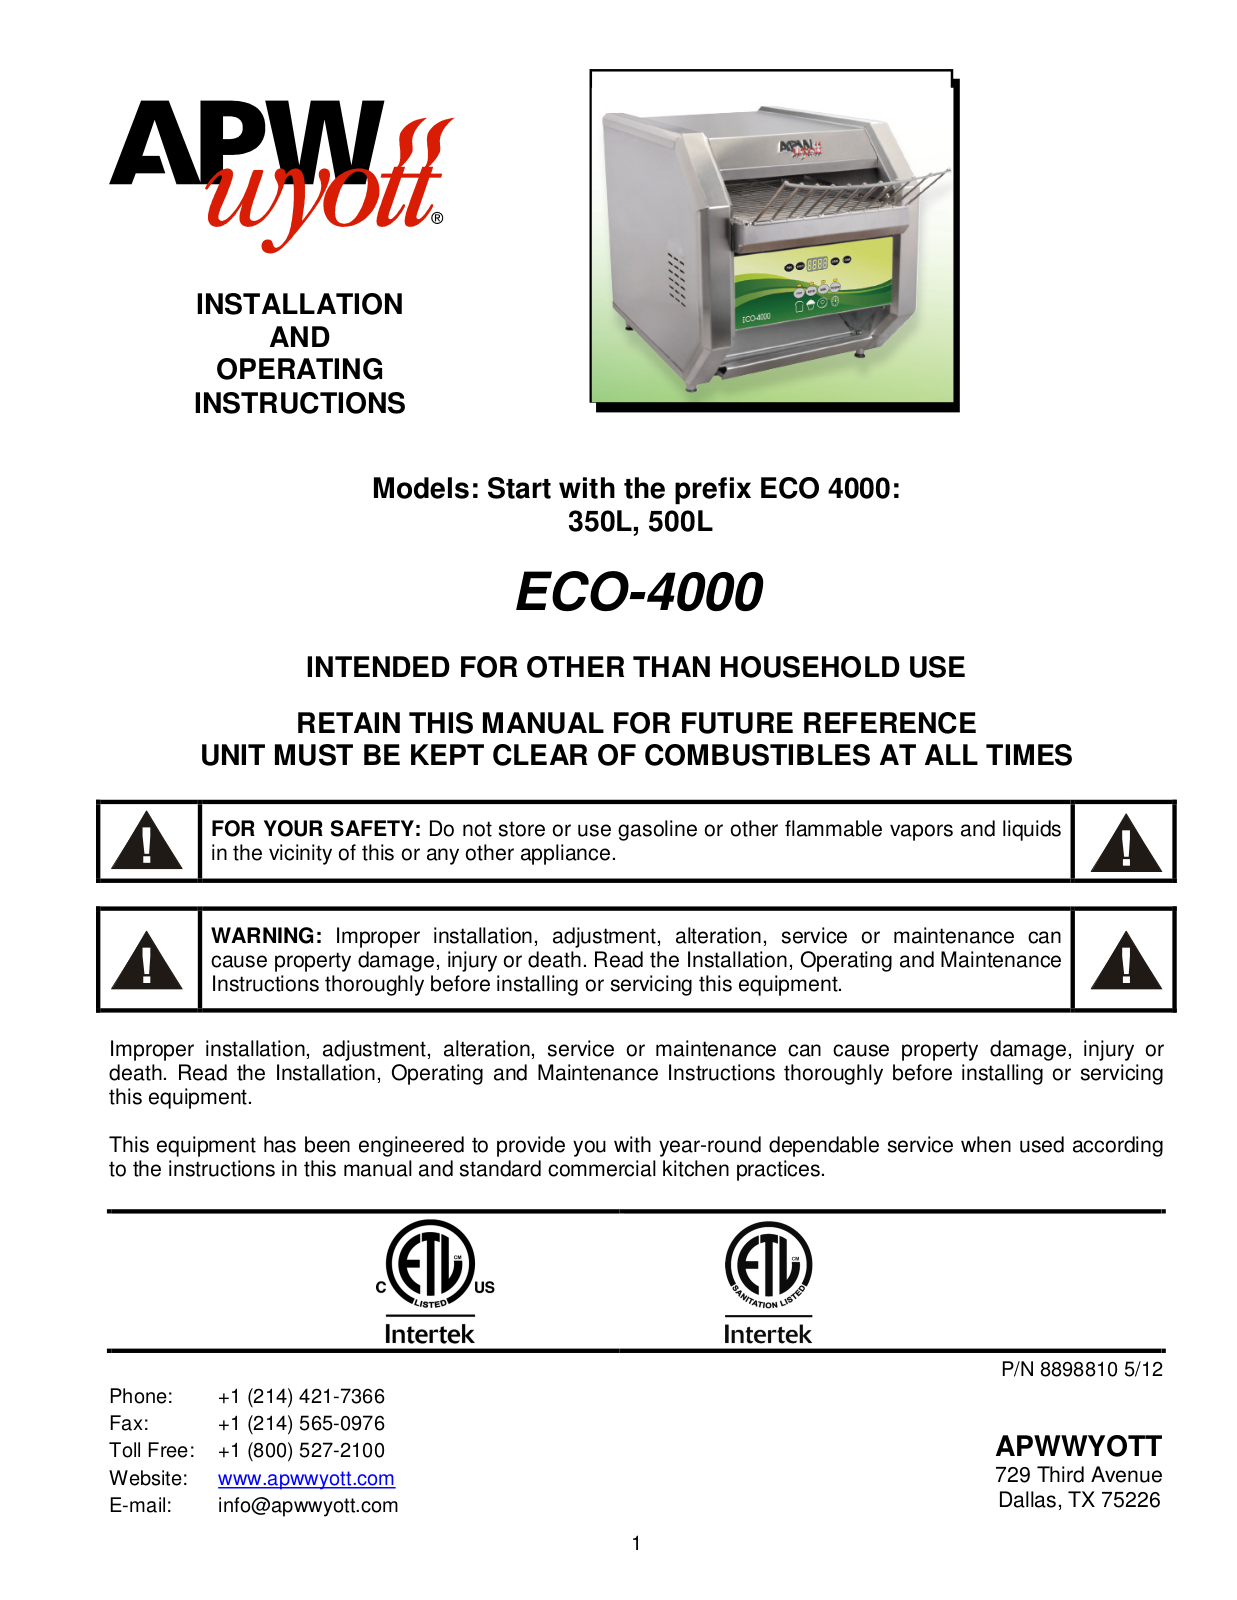 APW Wyott ECO-4000-350L Operators Manual